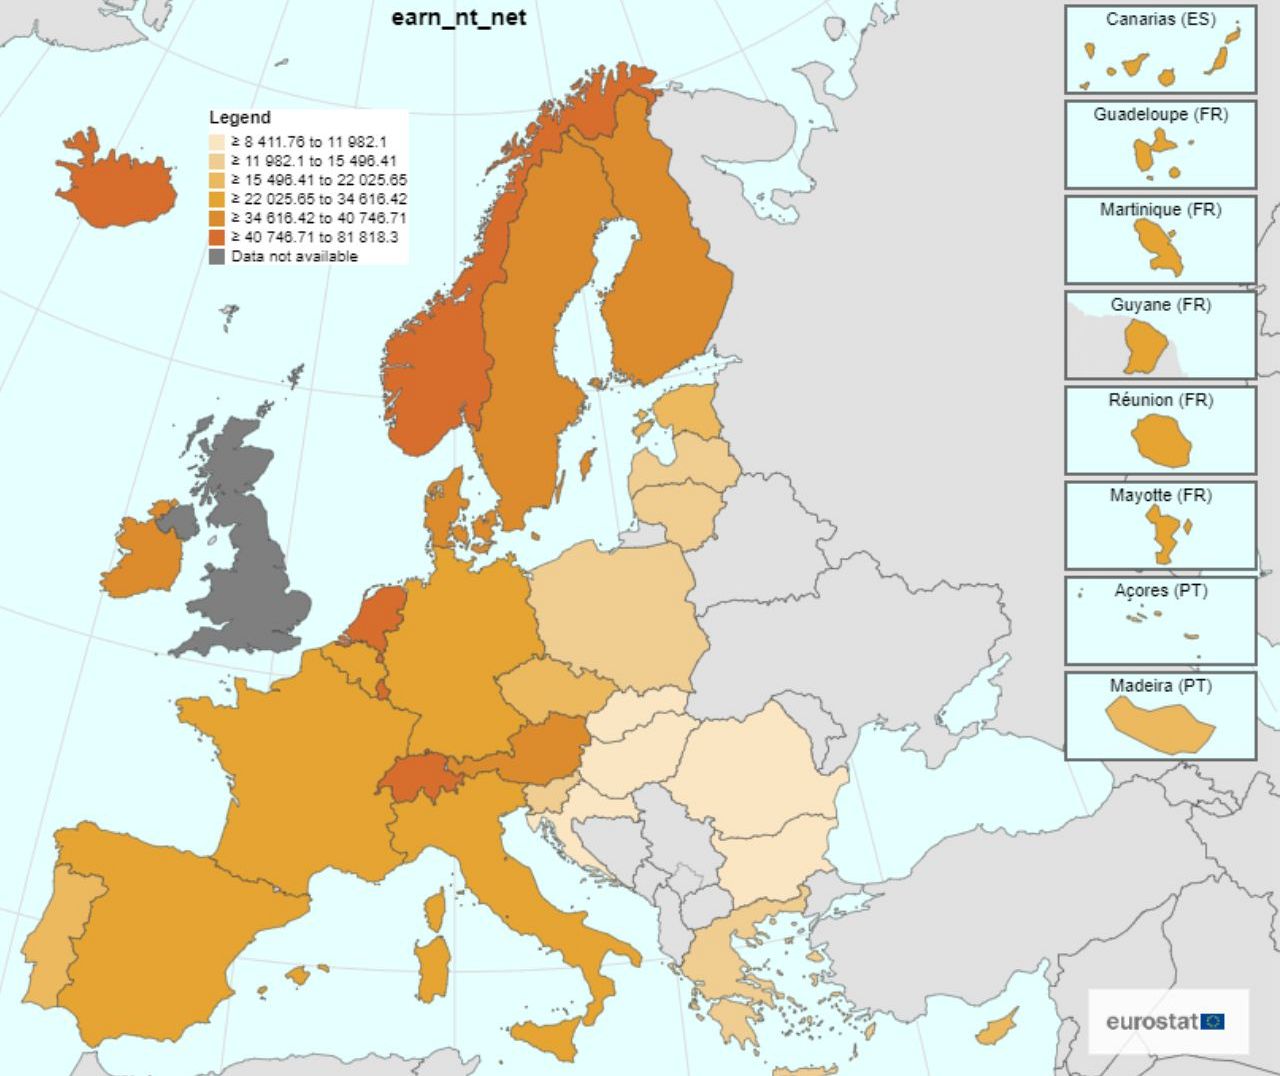 Annual net earnings in European countries